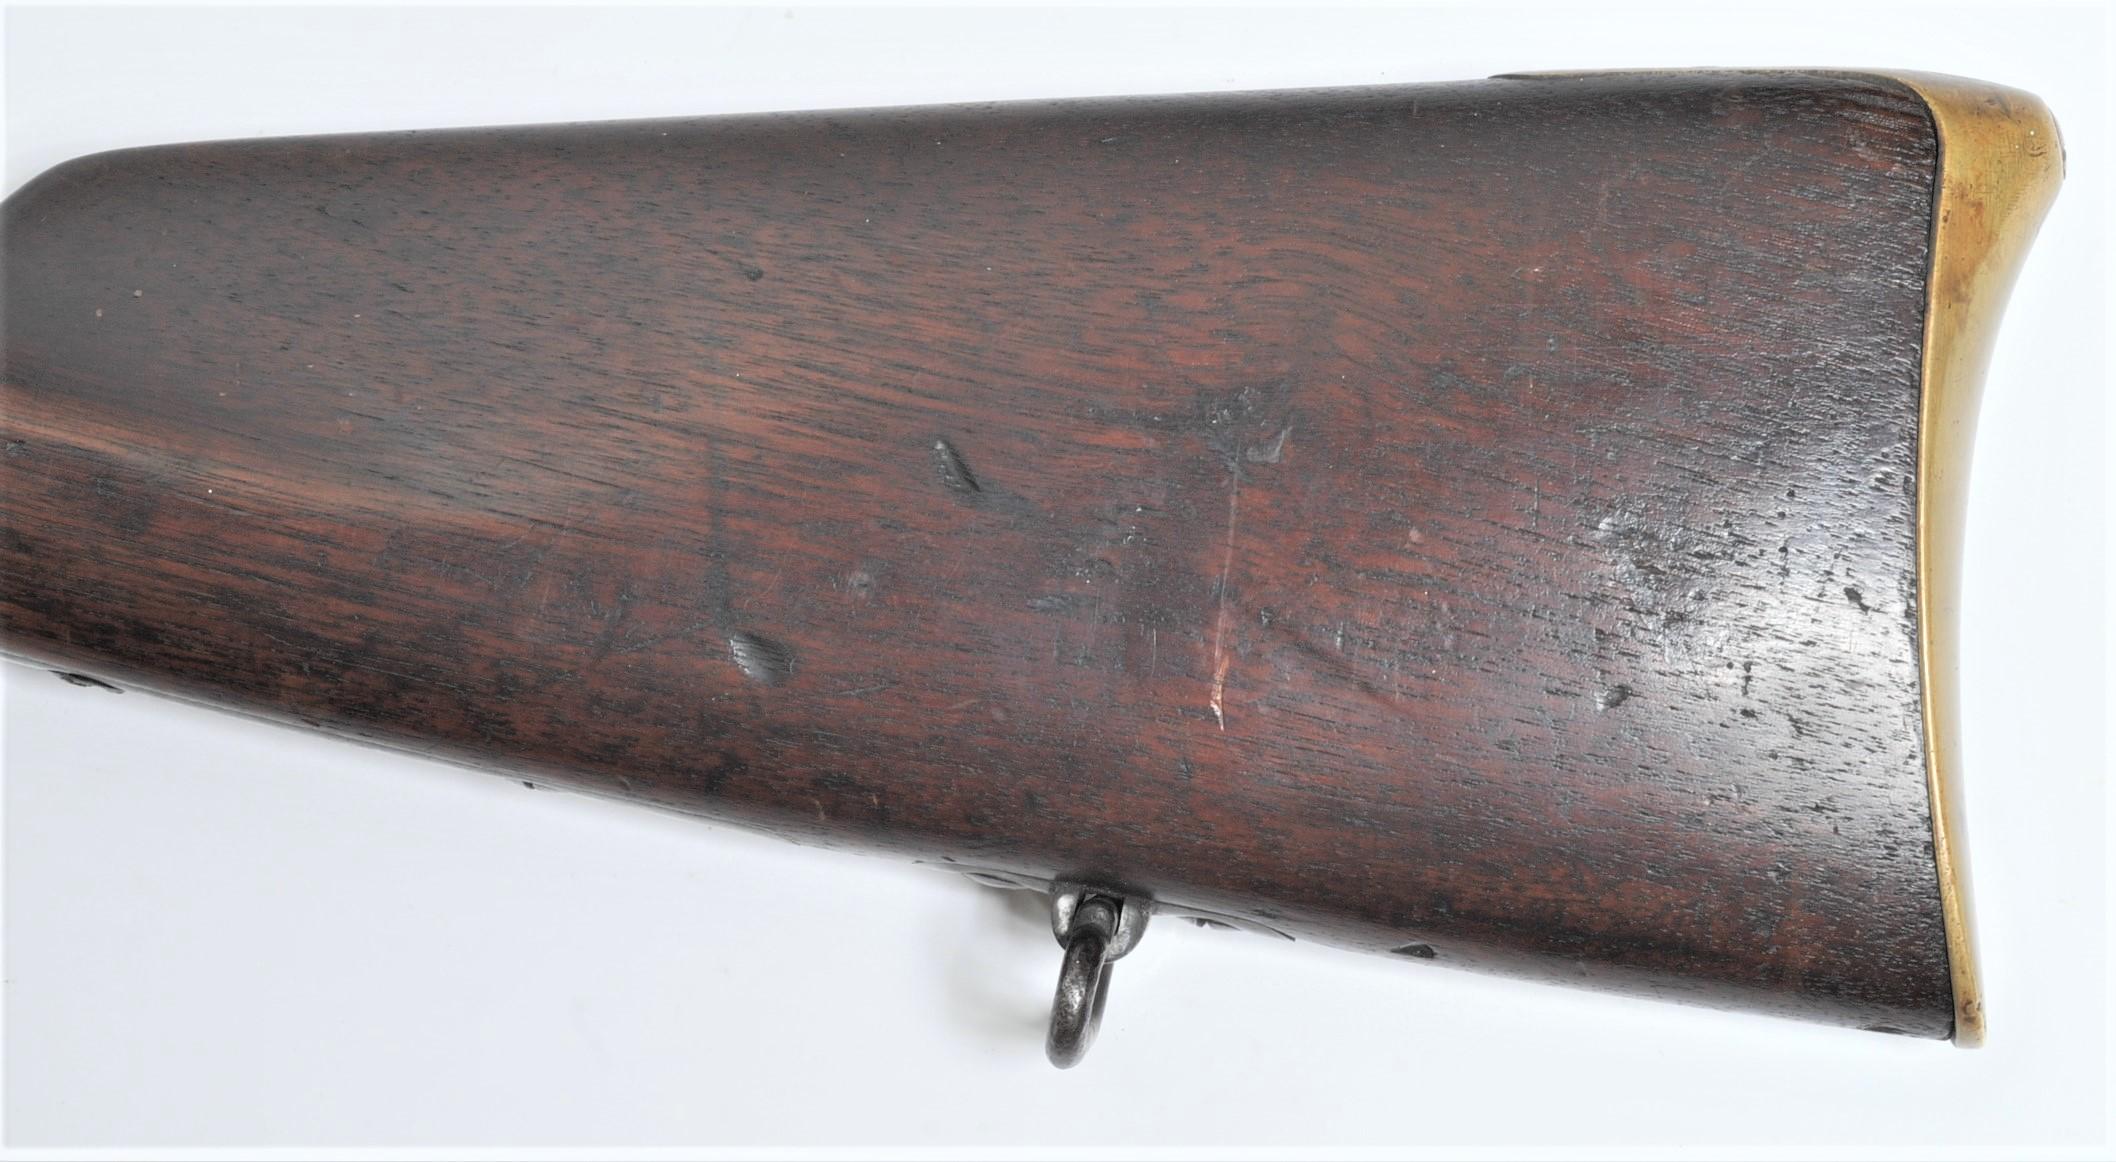 Civil War era Sharps and Hankins Naval Model .52 Rimfire Carbine - Antique - no FFL needed (KDW1)